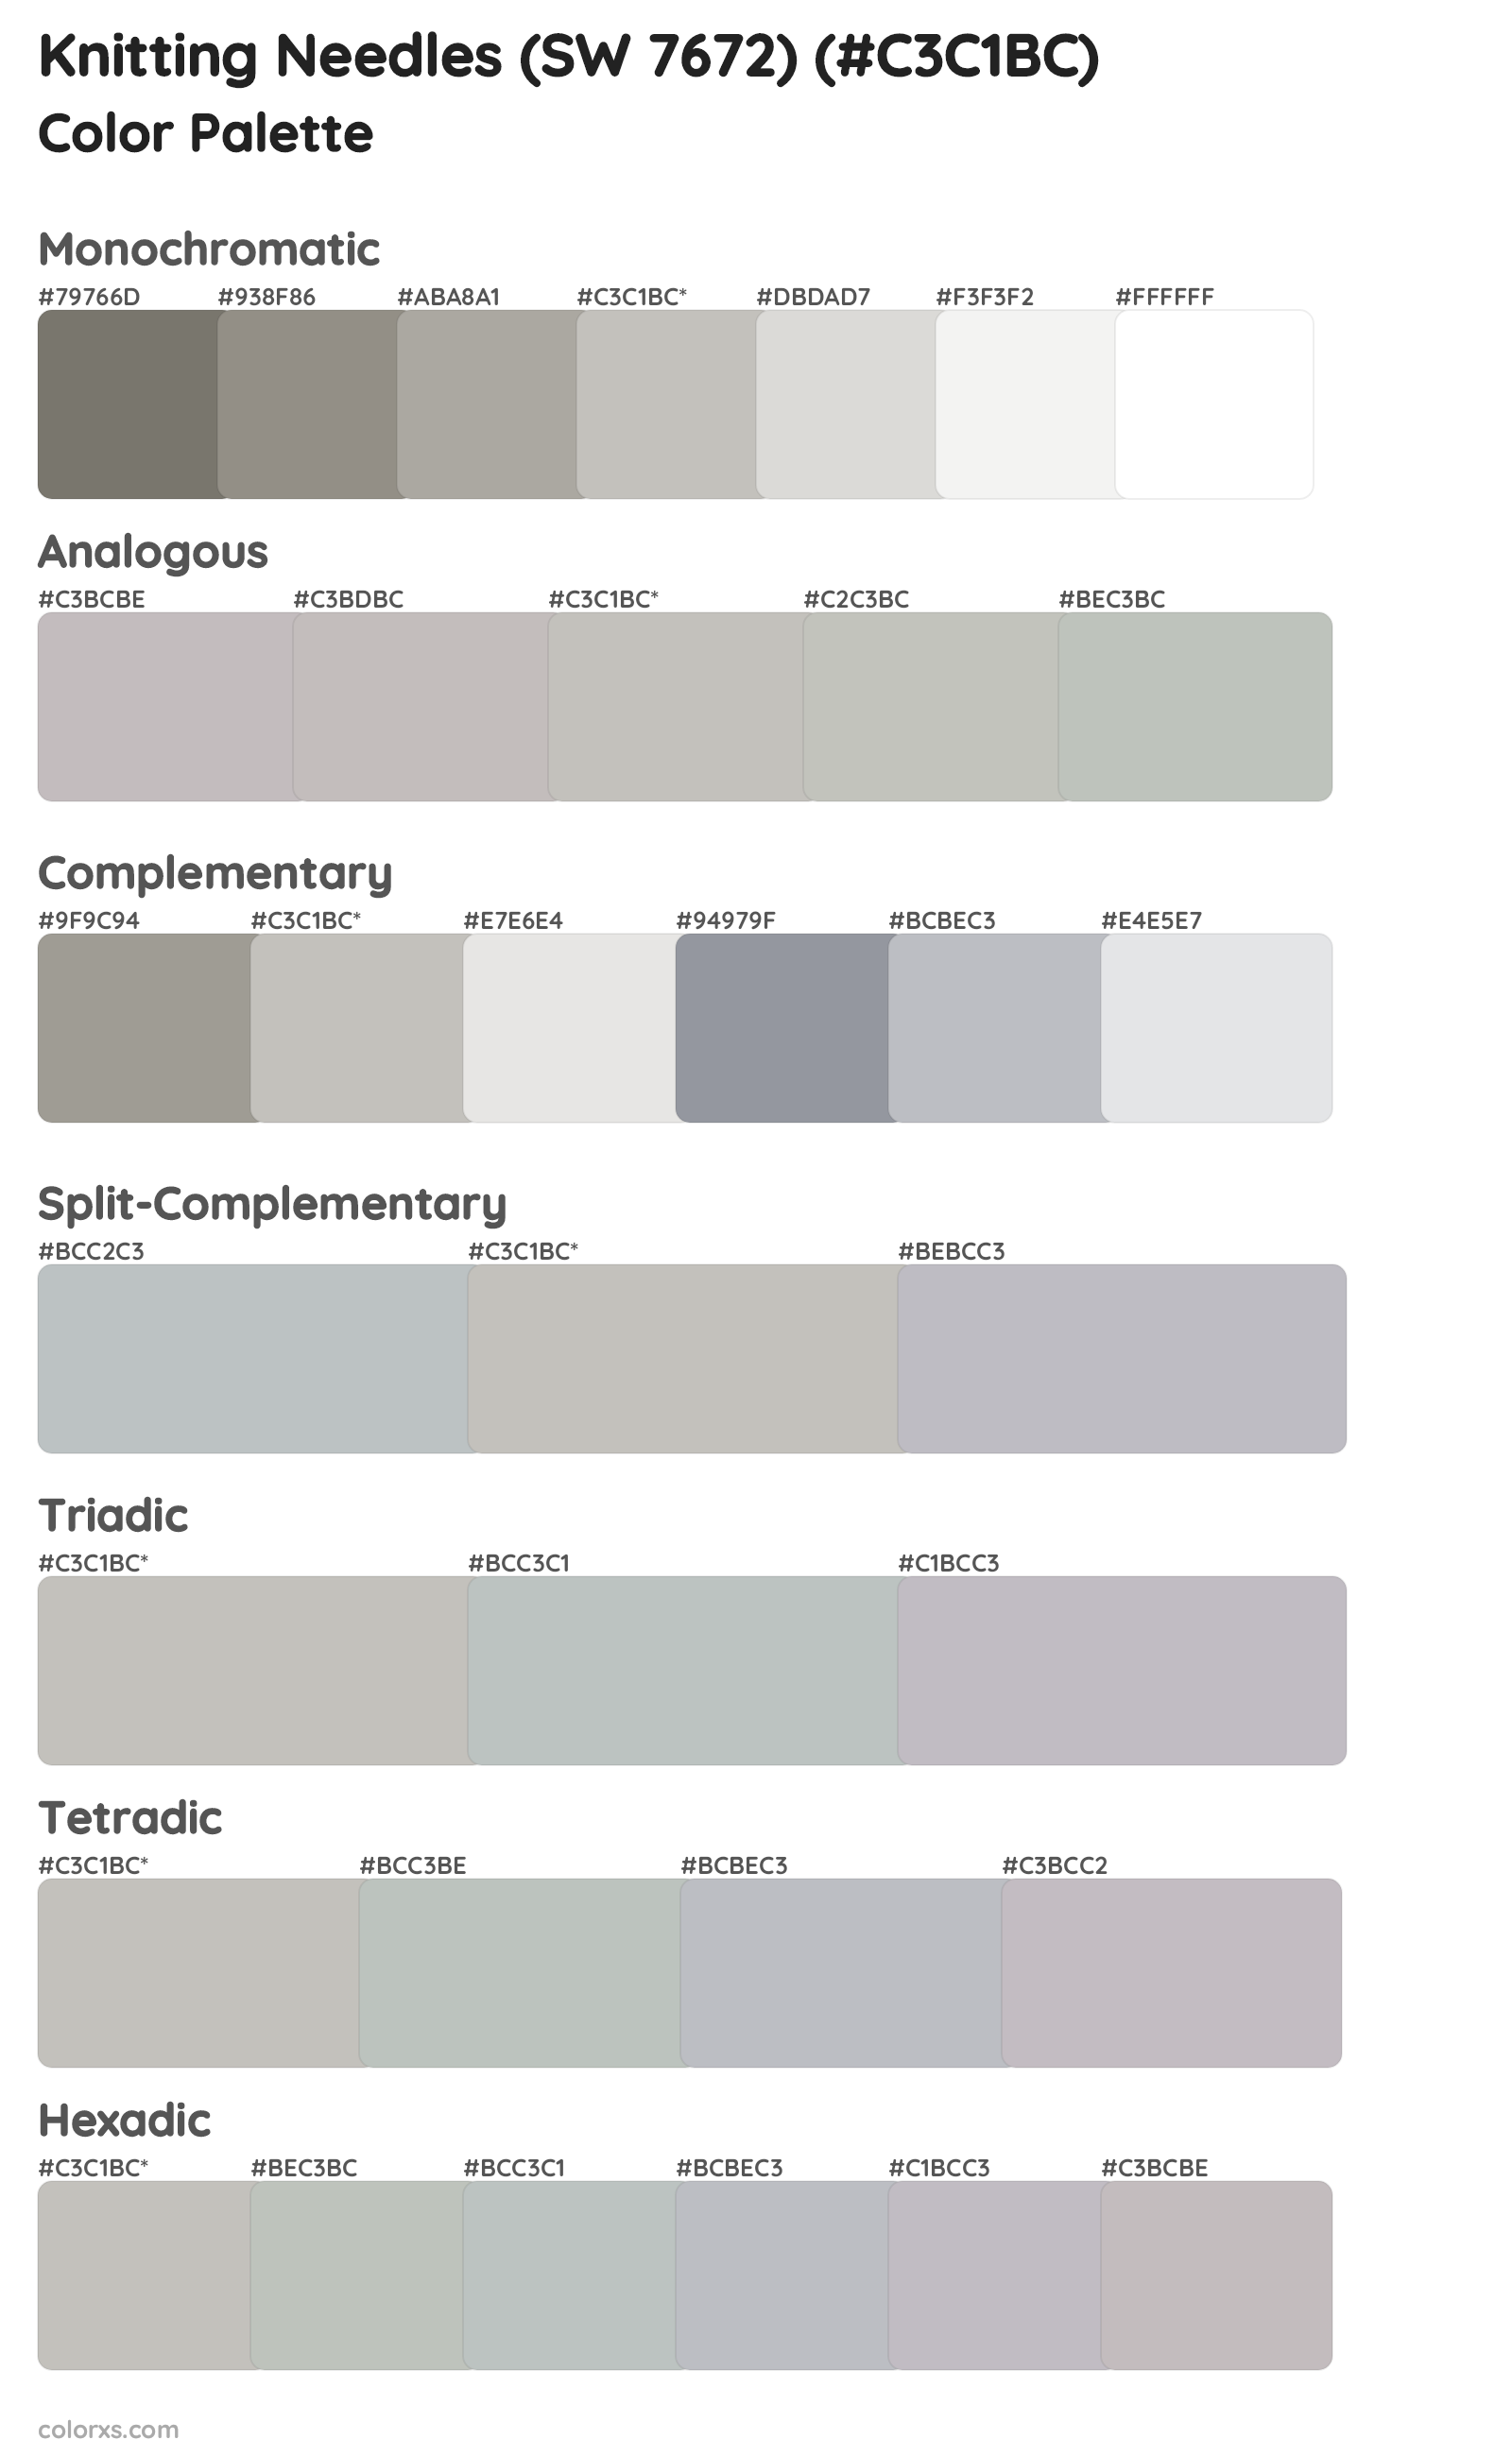 Knitting Needles (SW 7672) Color Scheme Palettes